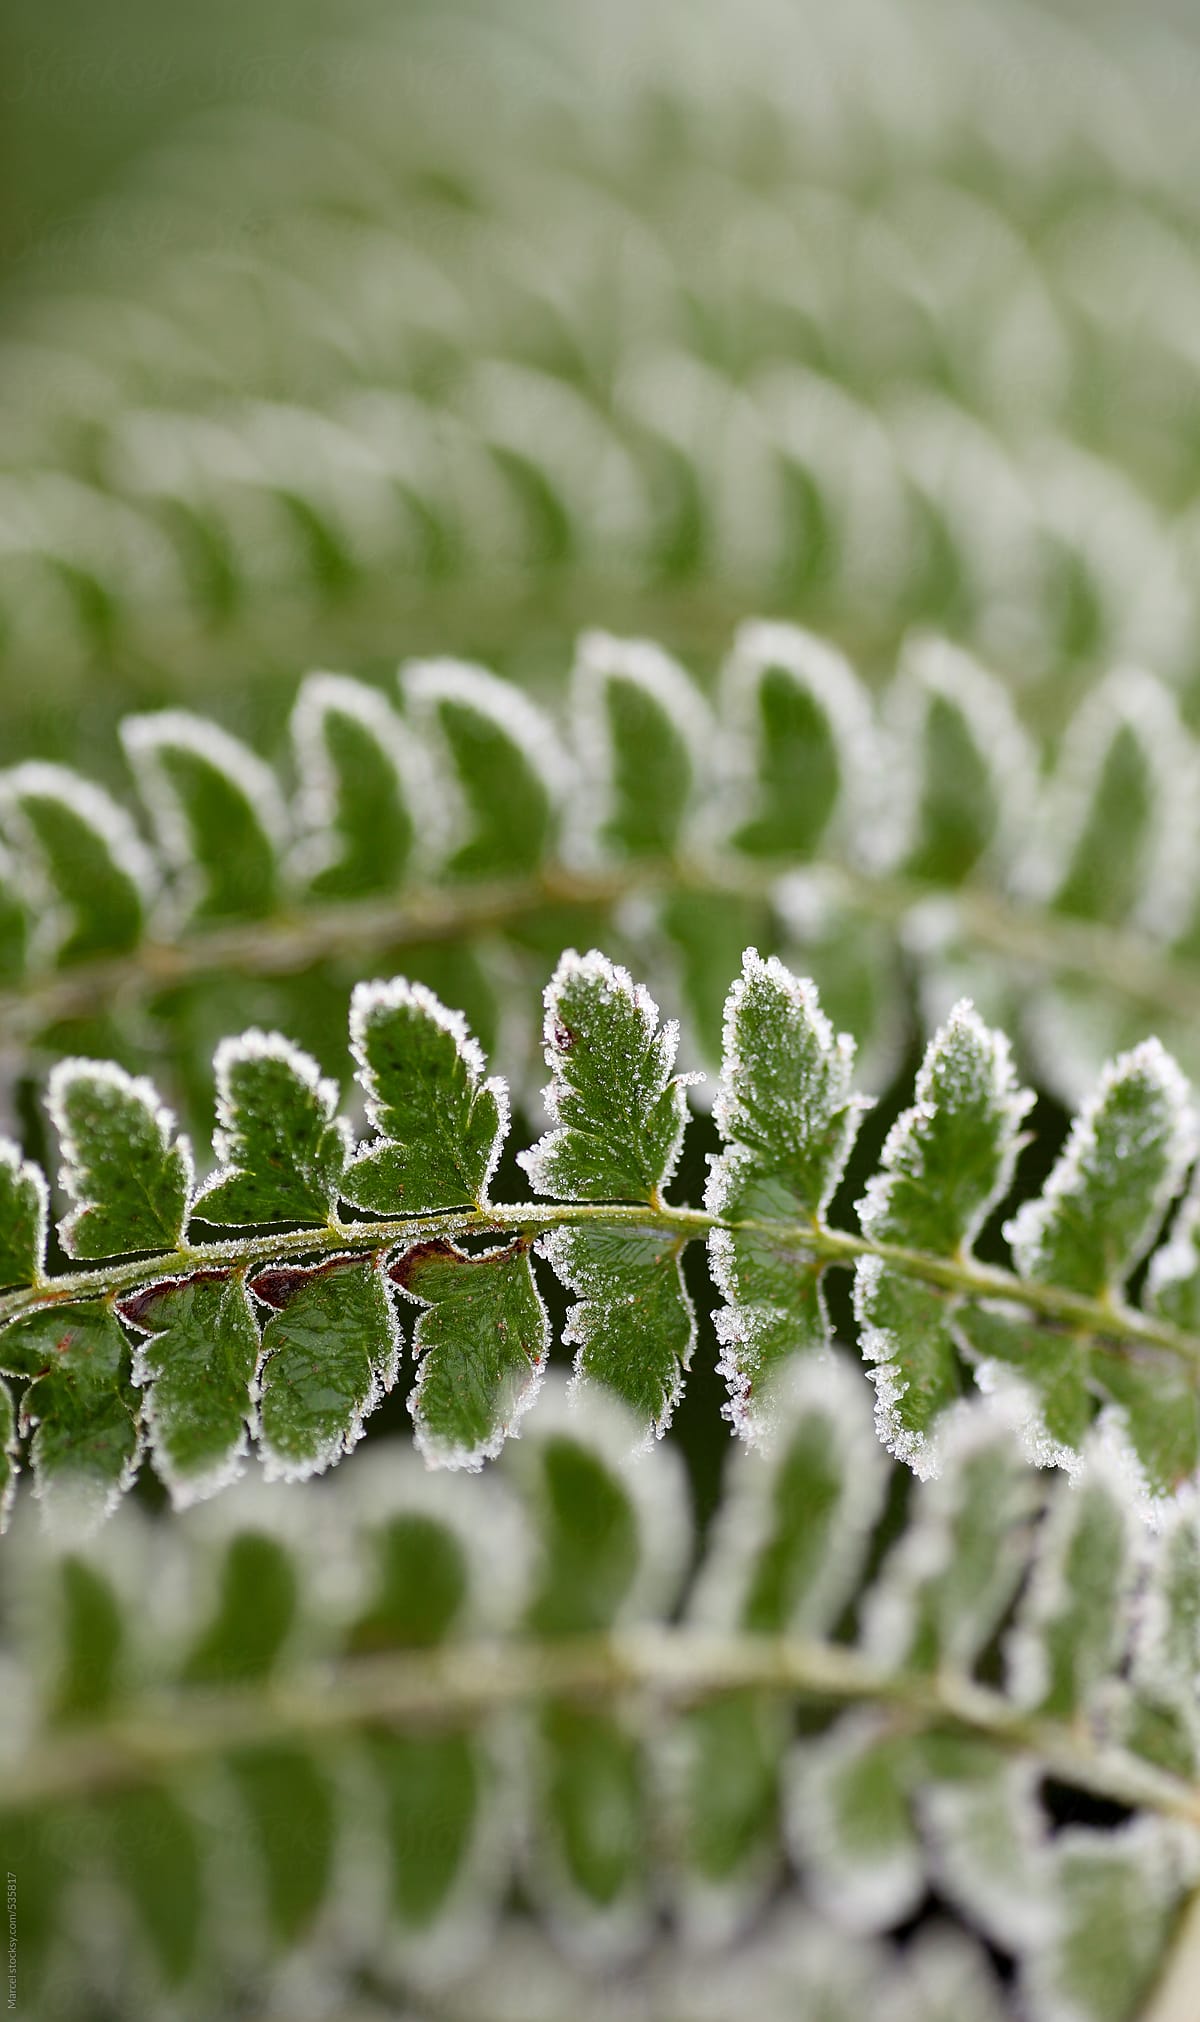 frost on a fern leaf